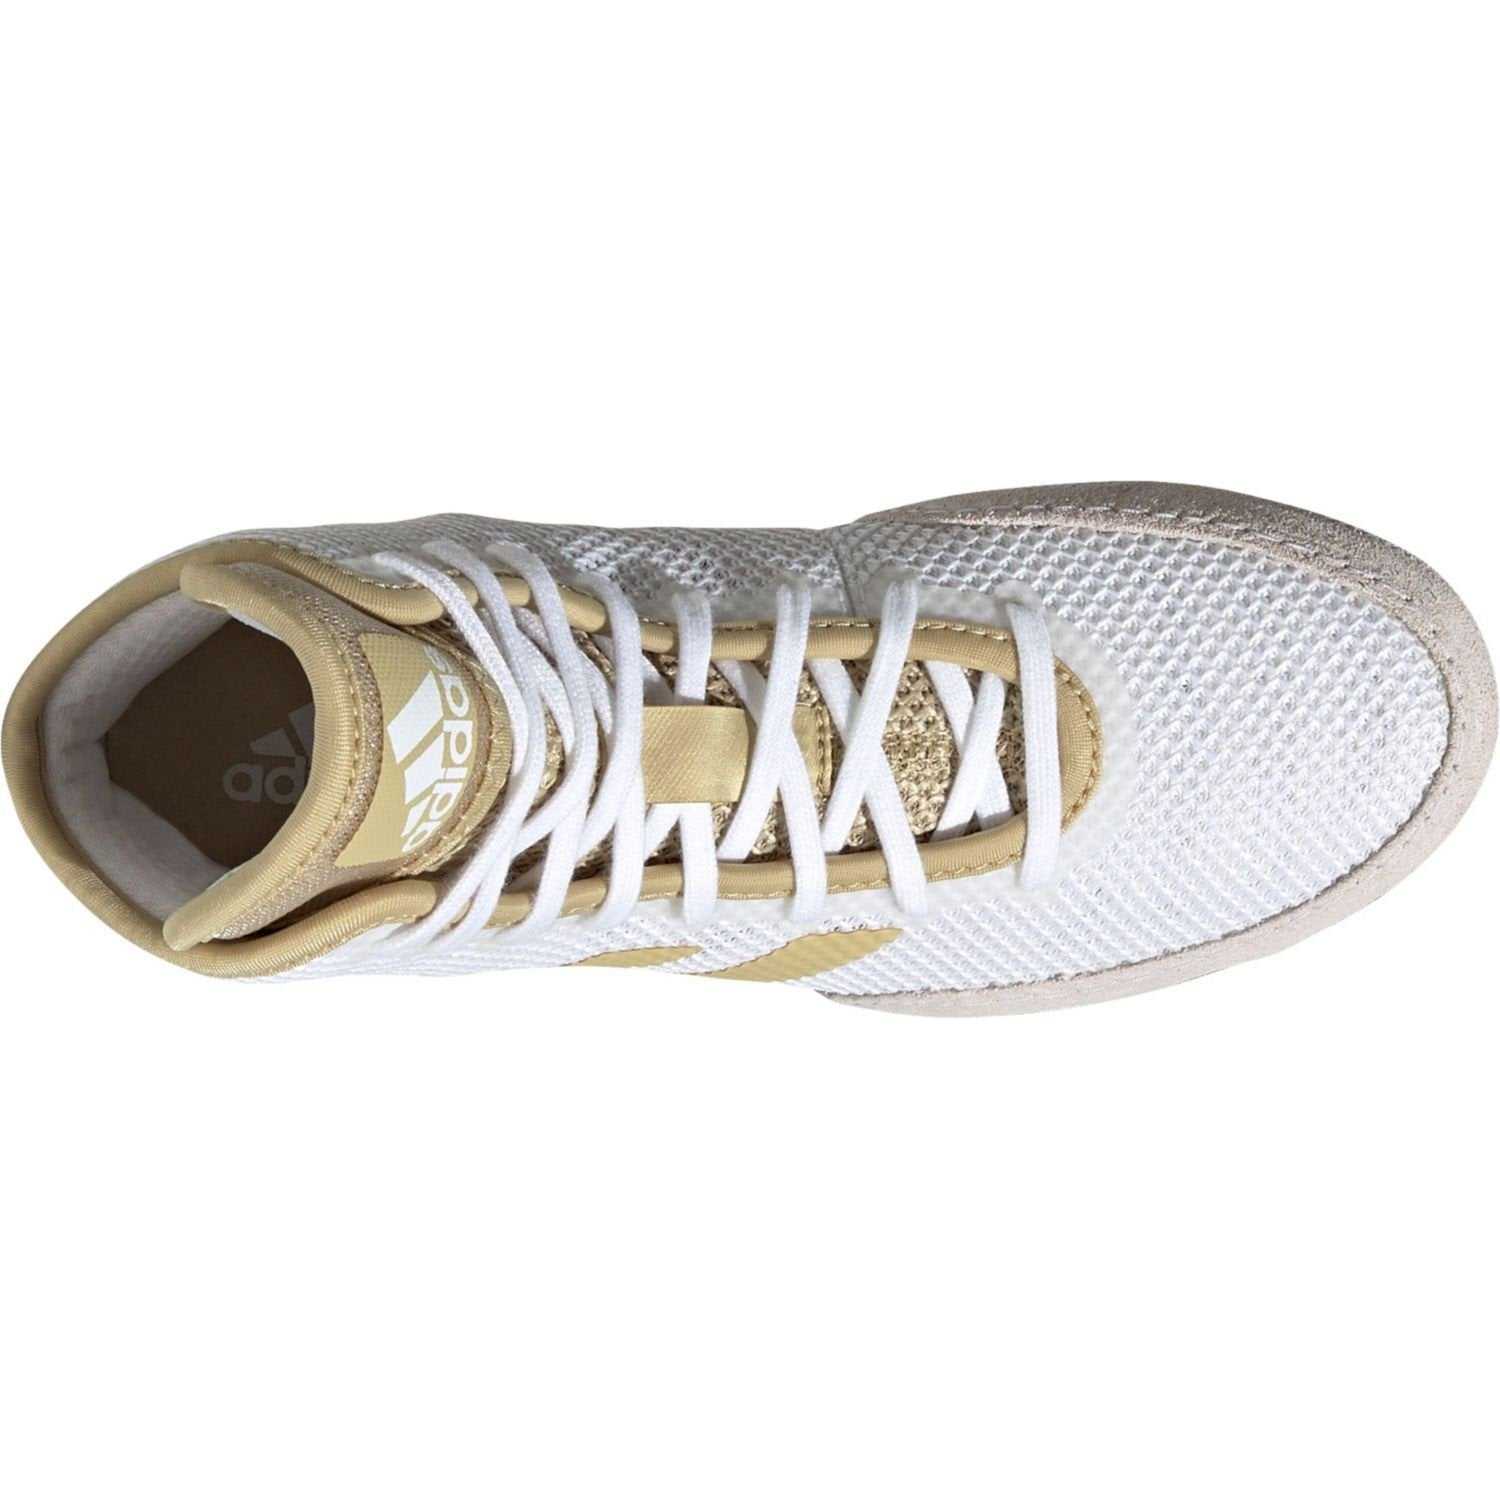 Adidas 230 Tech Fall 2.0 Wrestling Shoes - White Vegas Gold